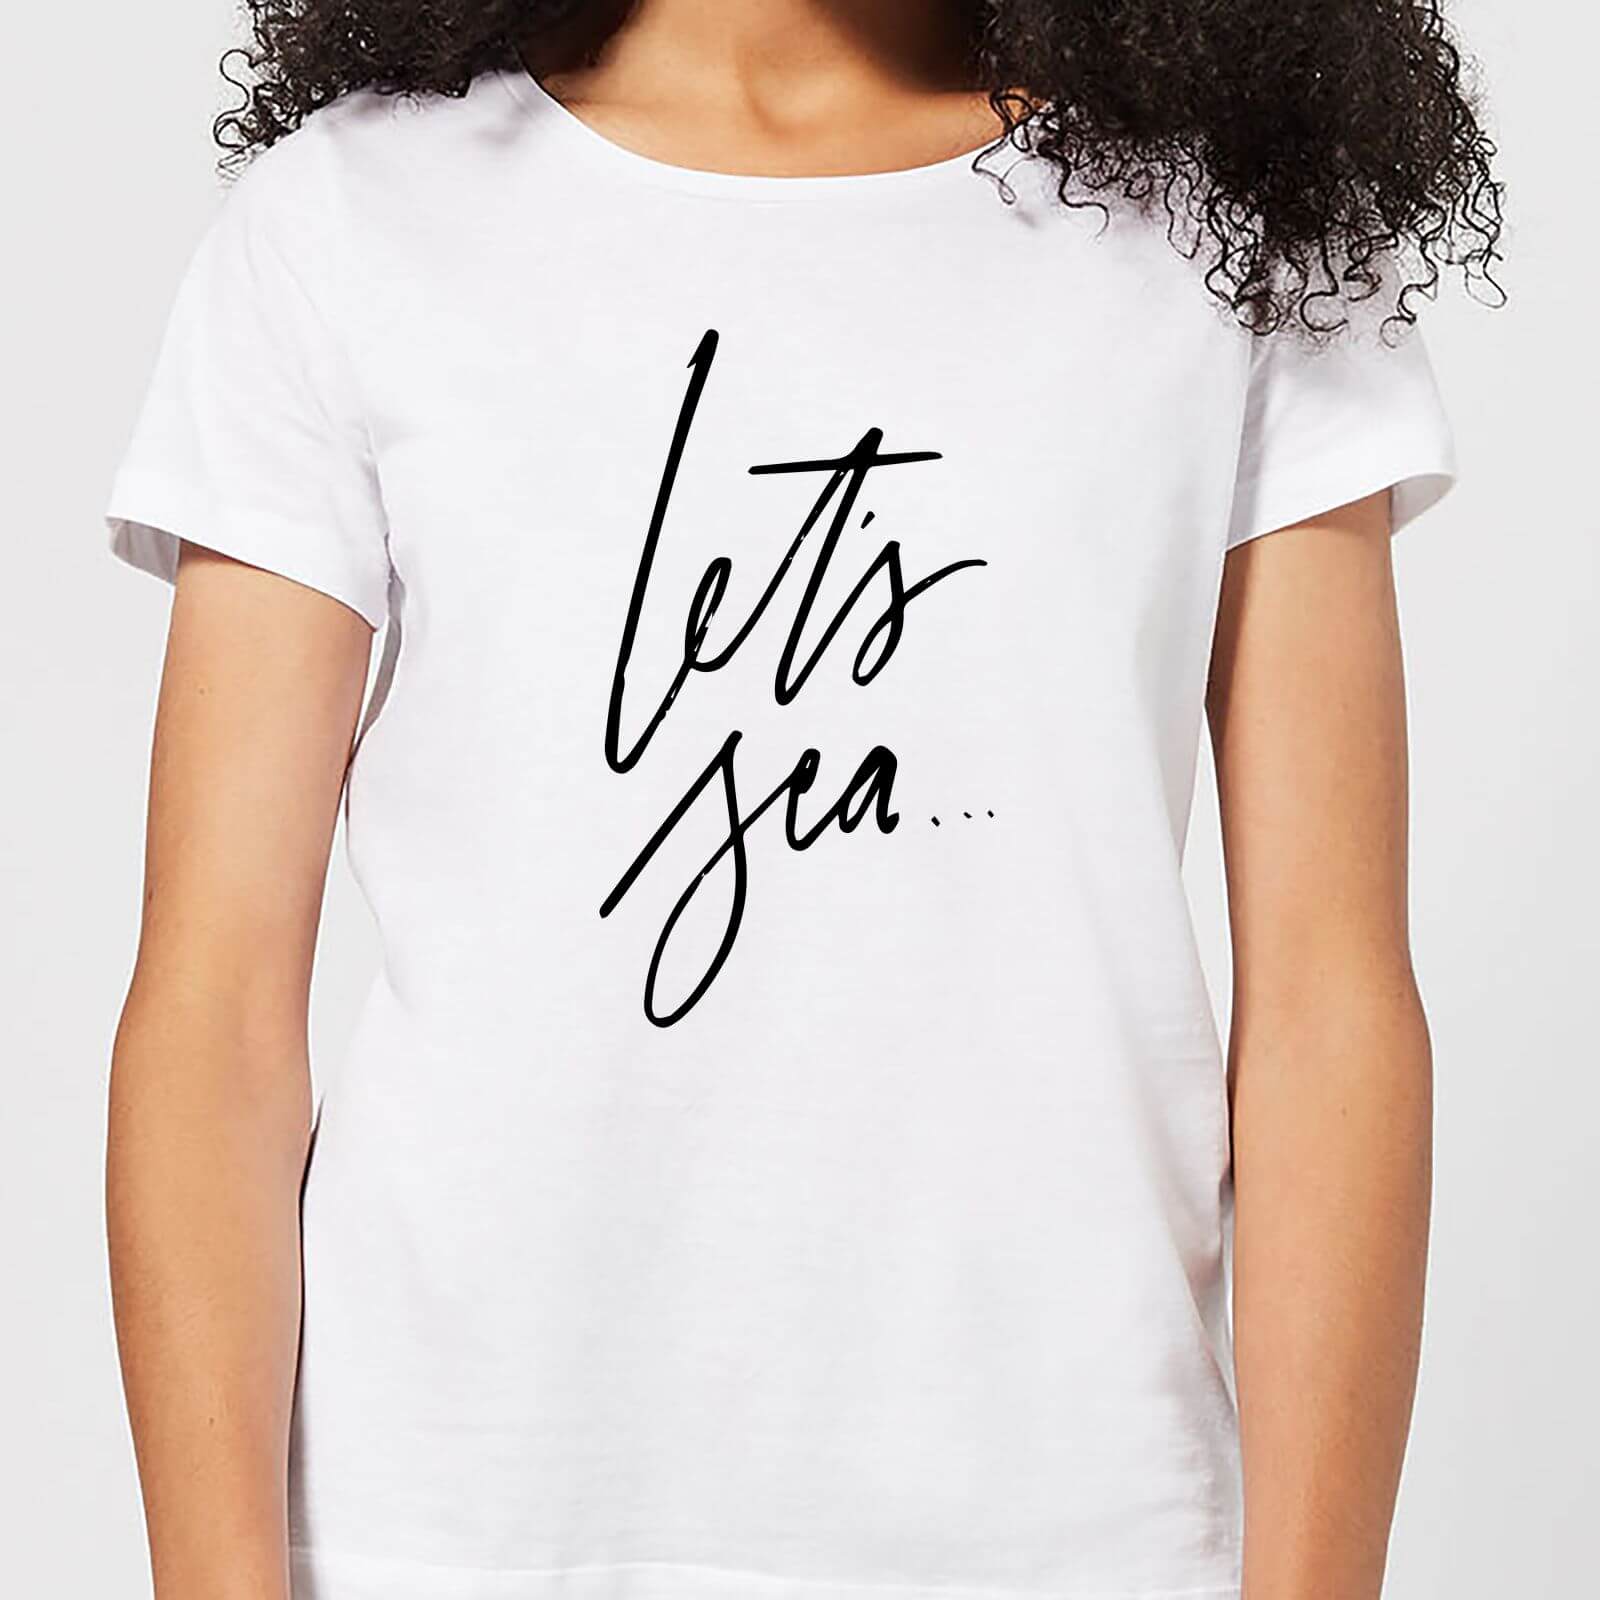 Let's Sea Women's T-Shirt - White - S - White